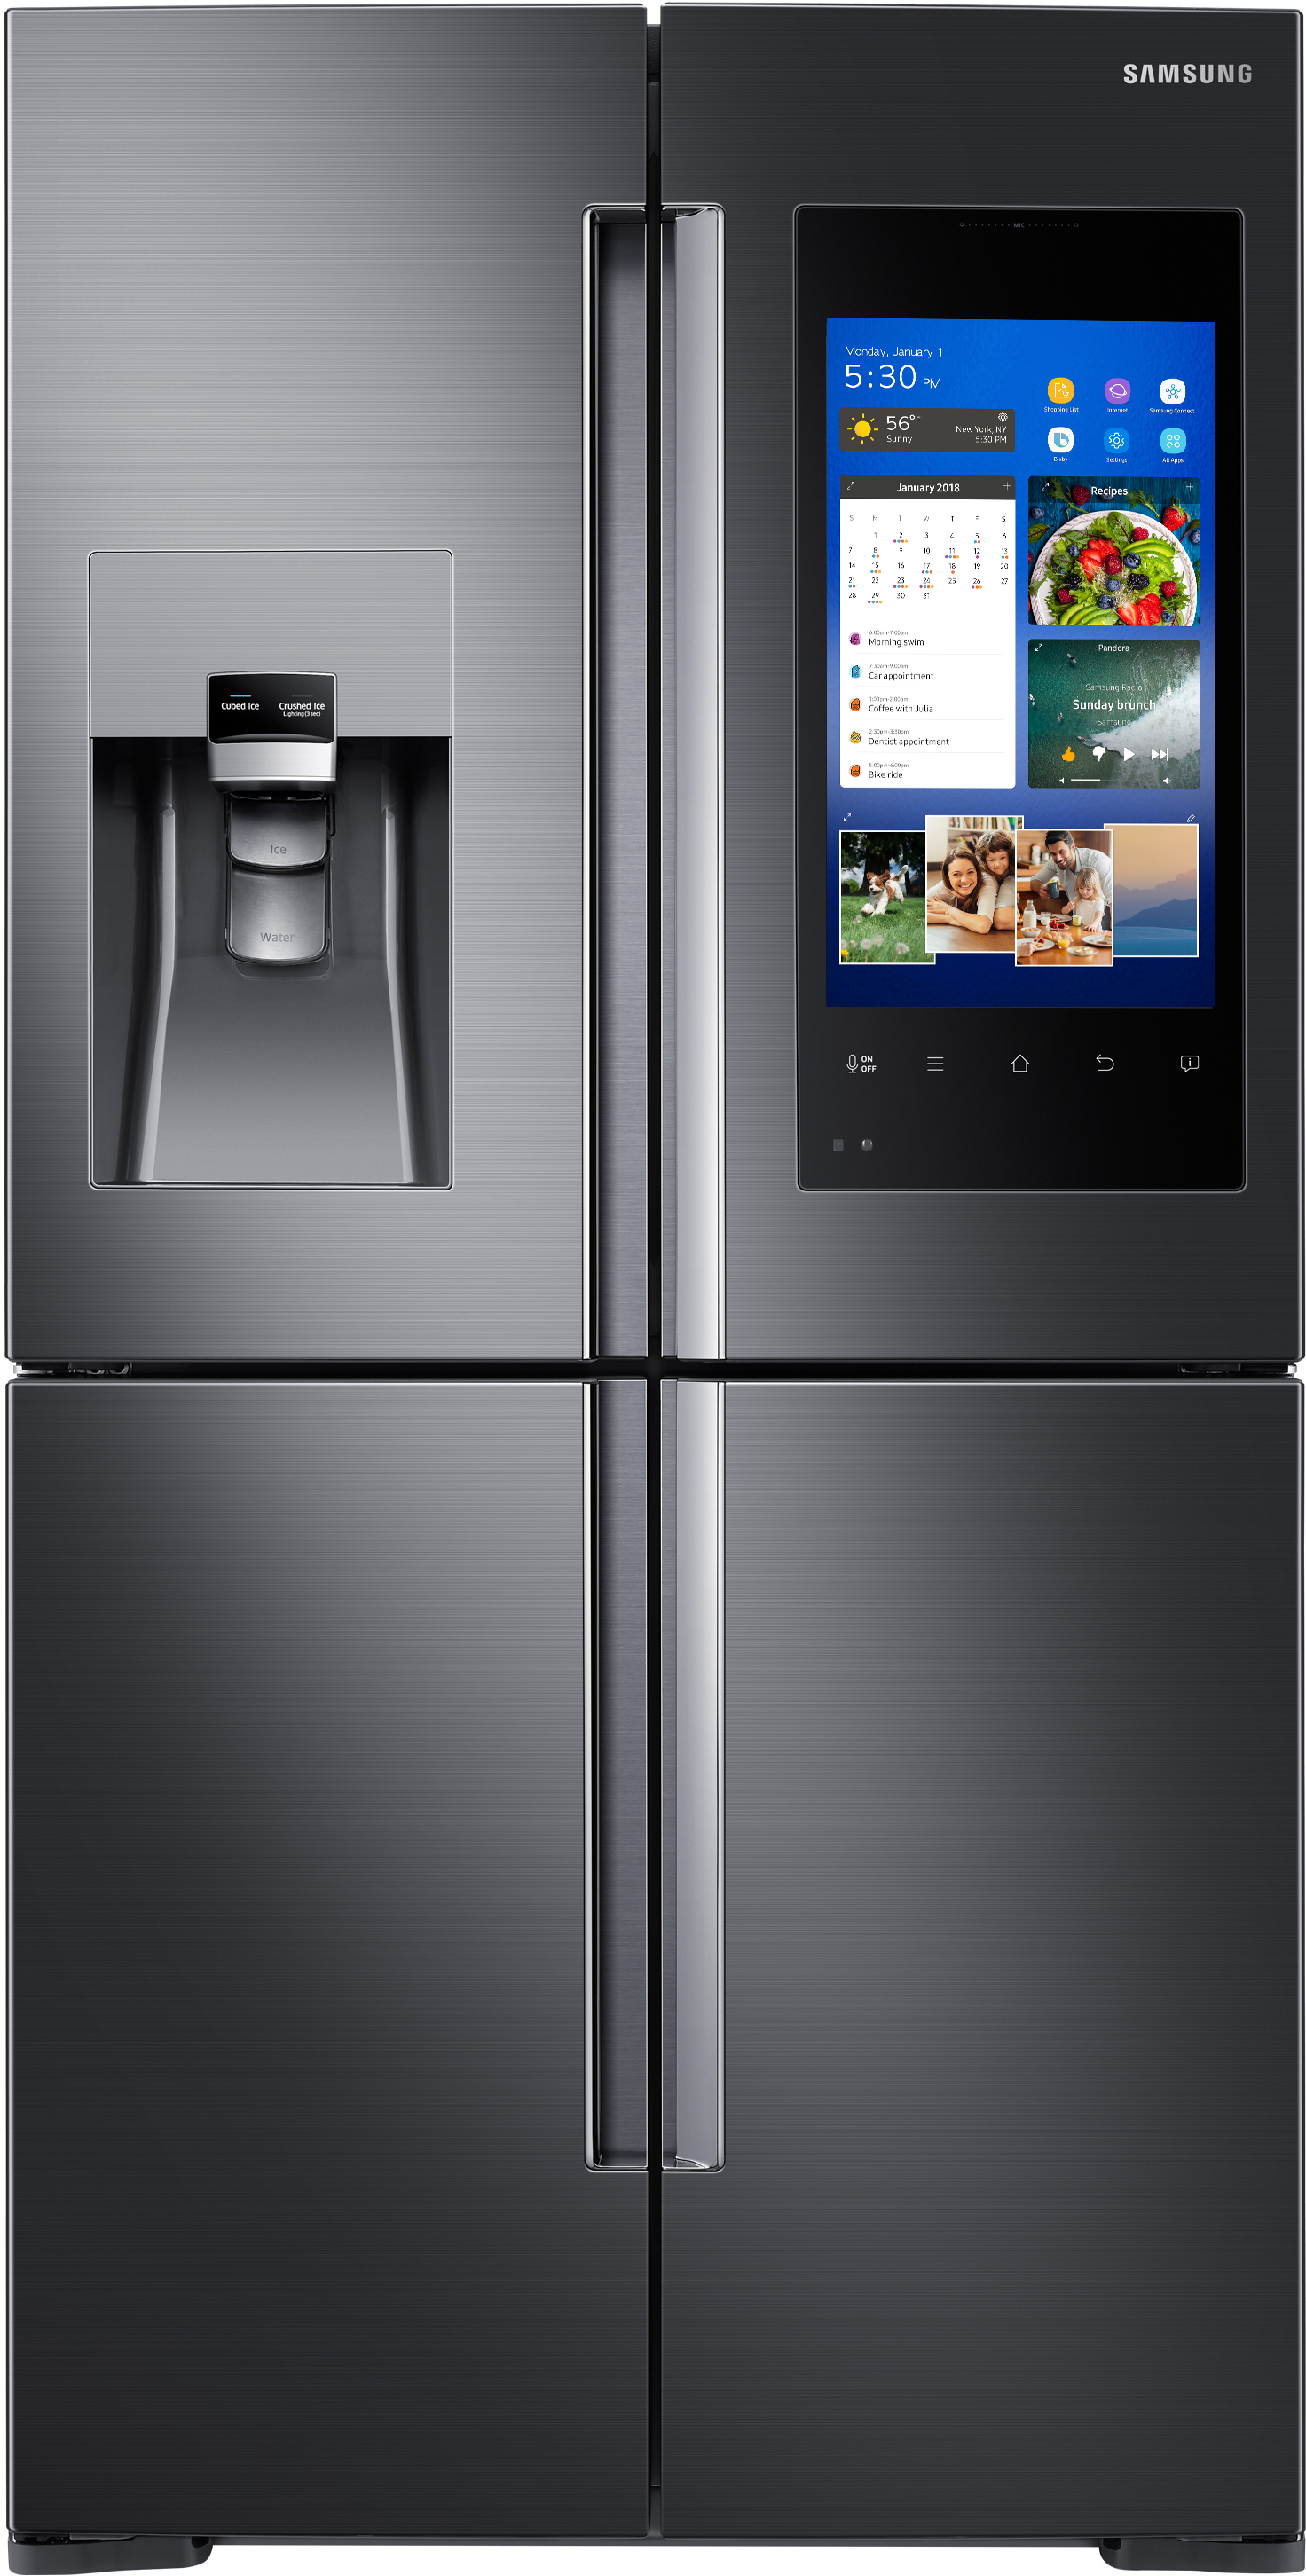 Samsung RF28M9580SG/AA 36 Inch 4-Door French Door Refrigerator with Family Hub, Flex Zone, 28 cu. ft. Capacity - Samsung Parts USA